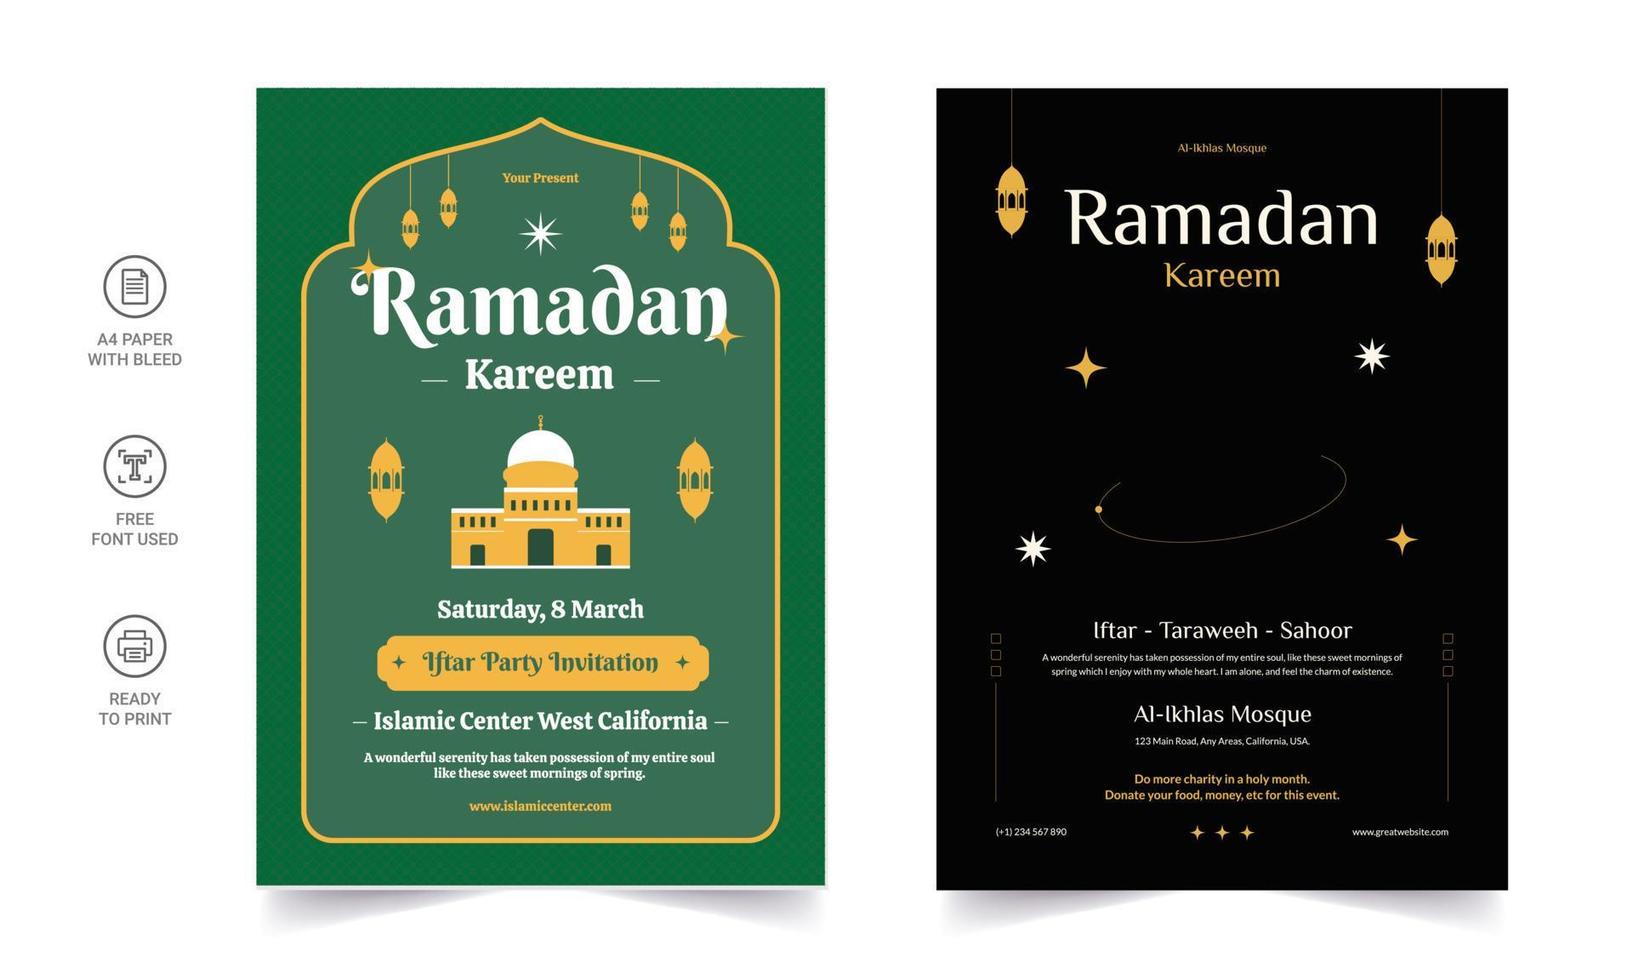 Ramadan Kareem Flyer. Ramadan Kareem set of posters or invitations design. decorative retro greeting card or invitation layout design vector